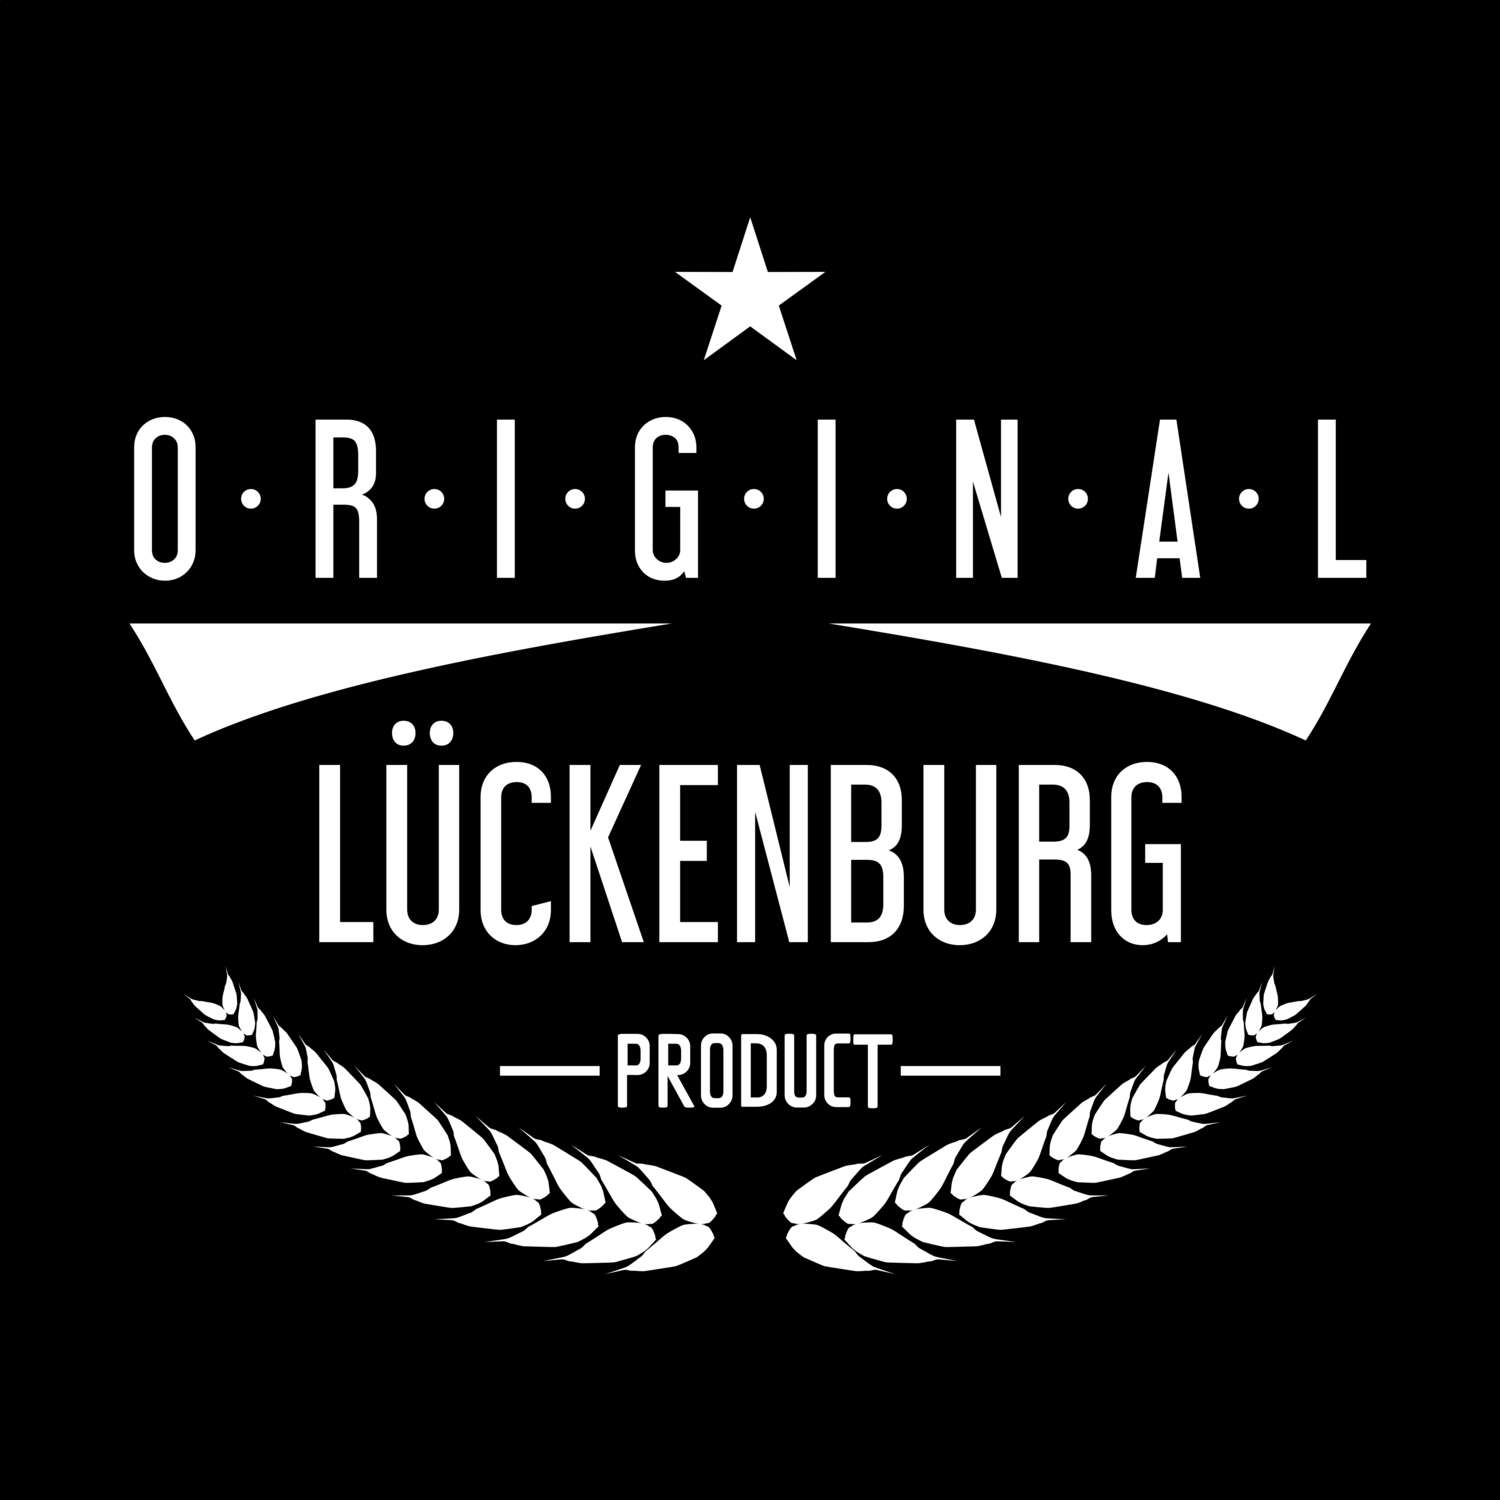 Lückenburg T-Shirt »Original Product«